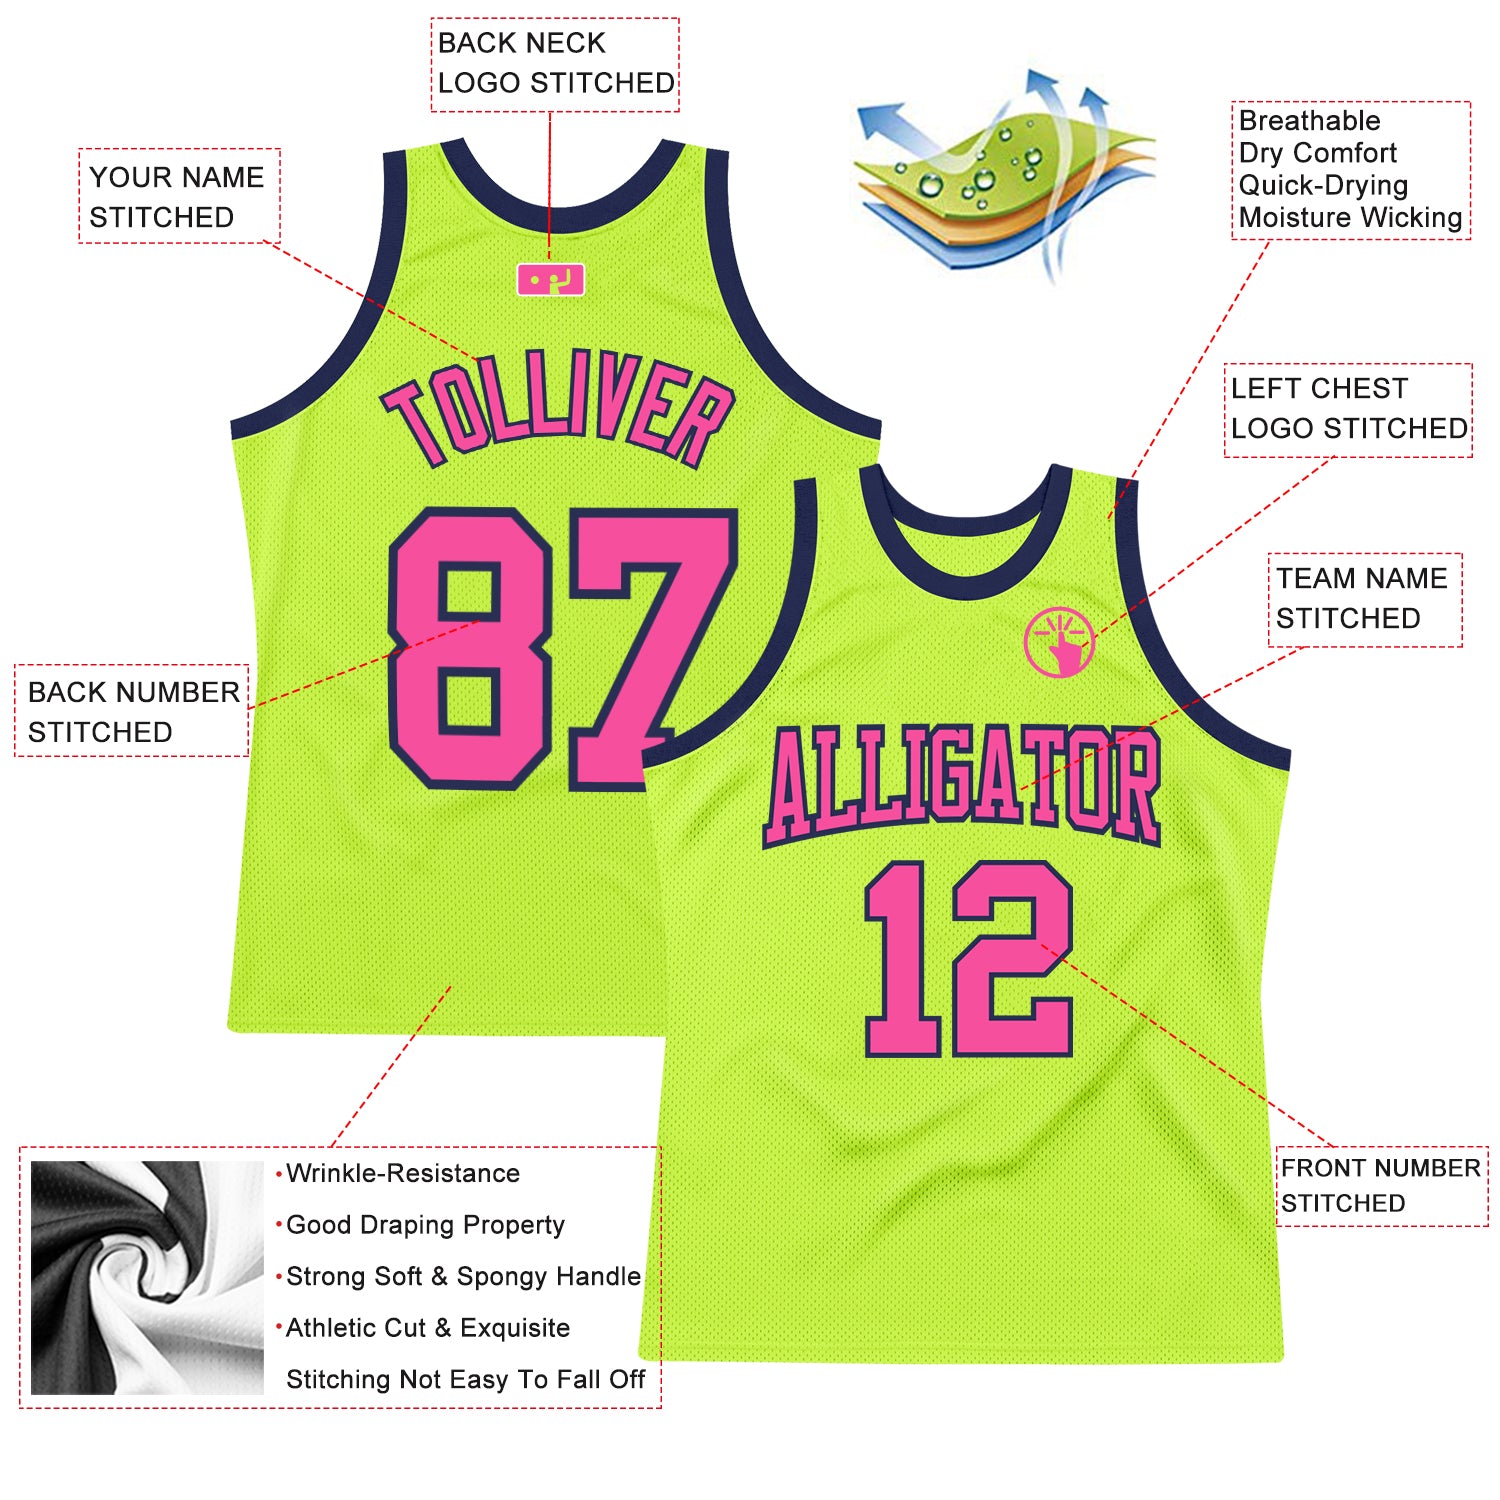 Custom Basketball Fashion Jersey Colorful Printed Personalized